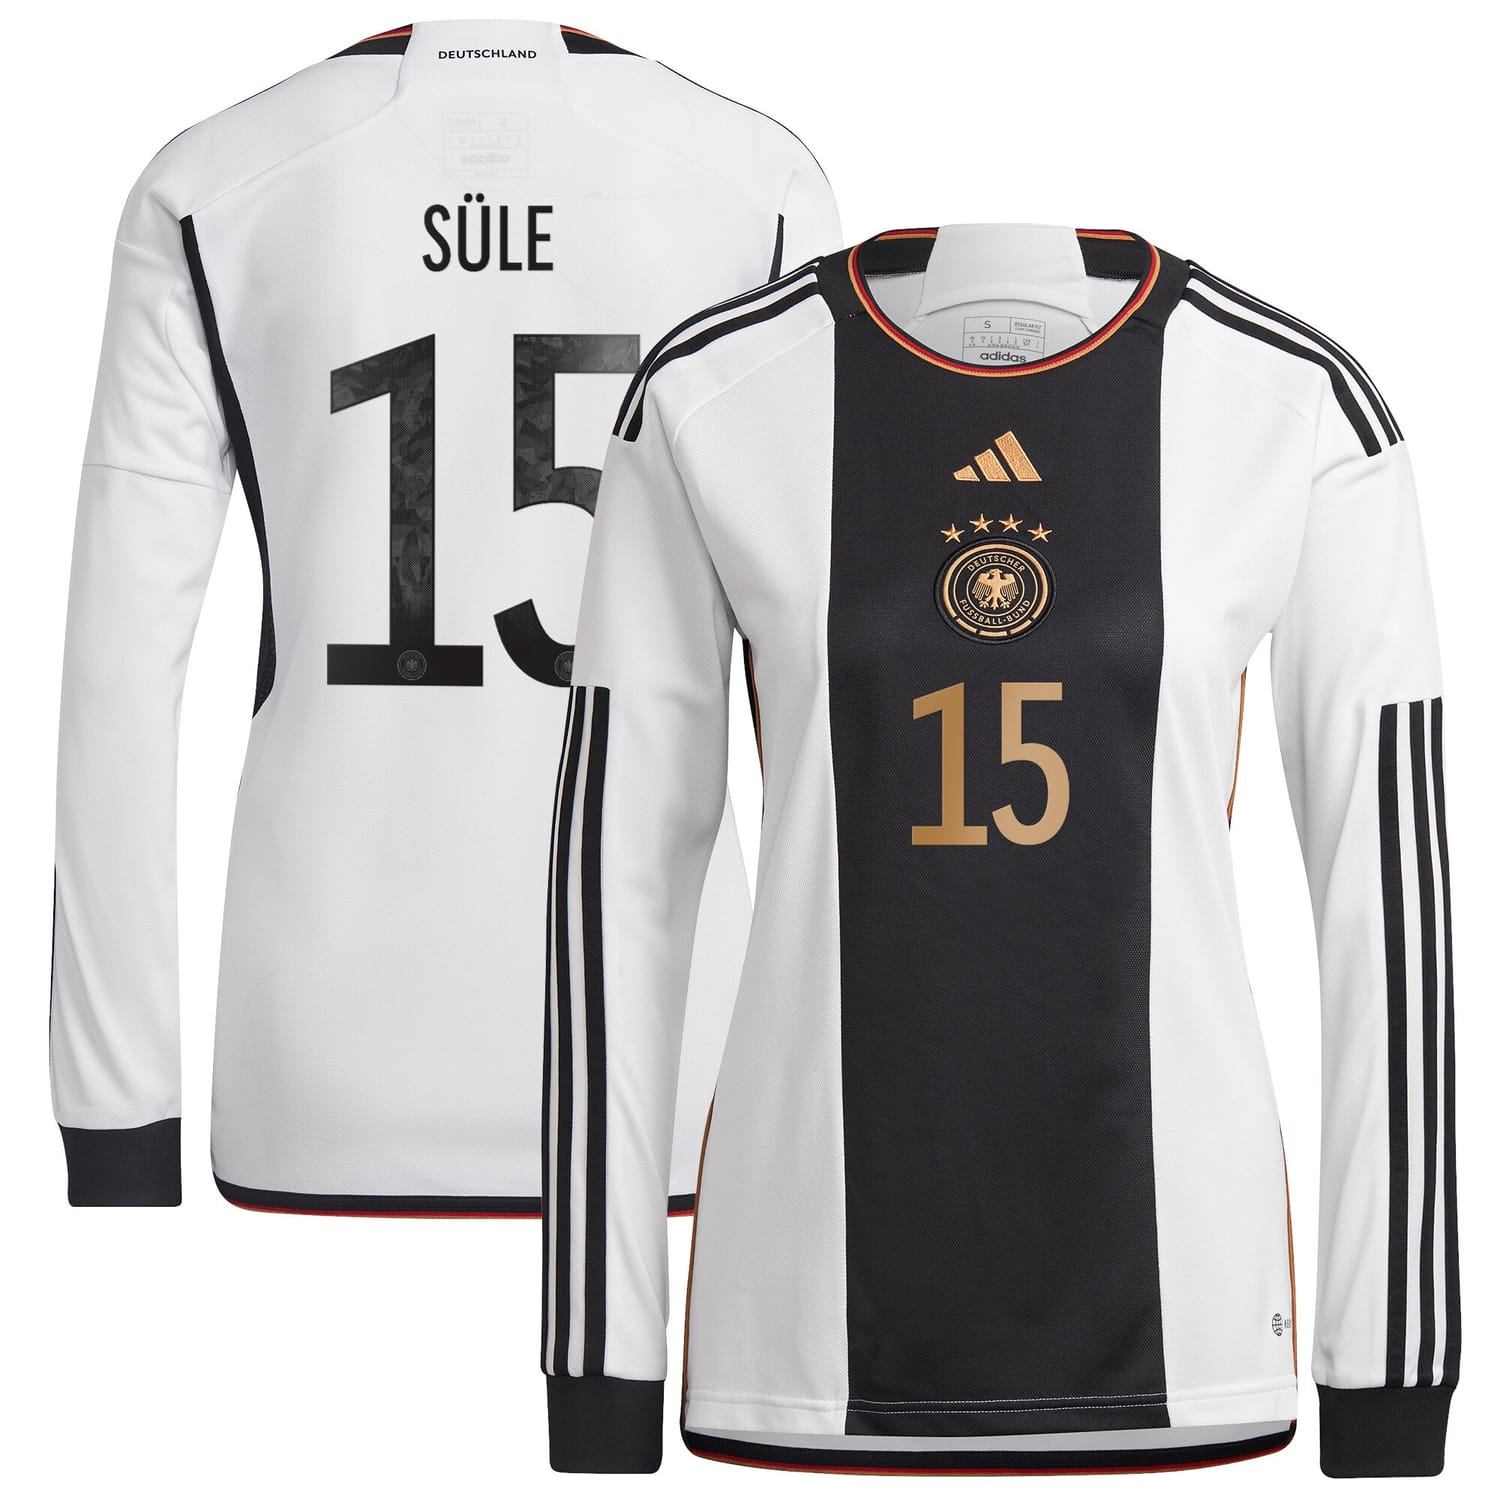 Germany National Team Home Jersey Shirt Long Sleeve player Niklas Süle 15 printing for Women